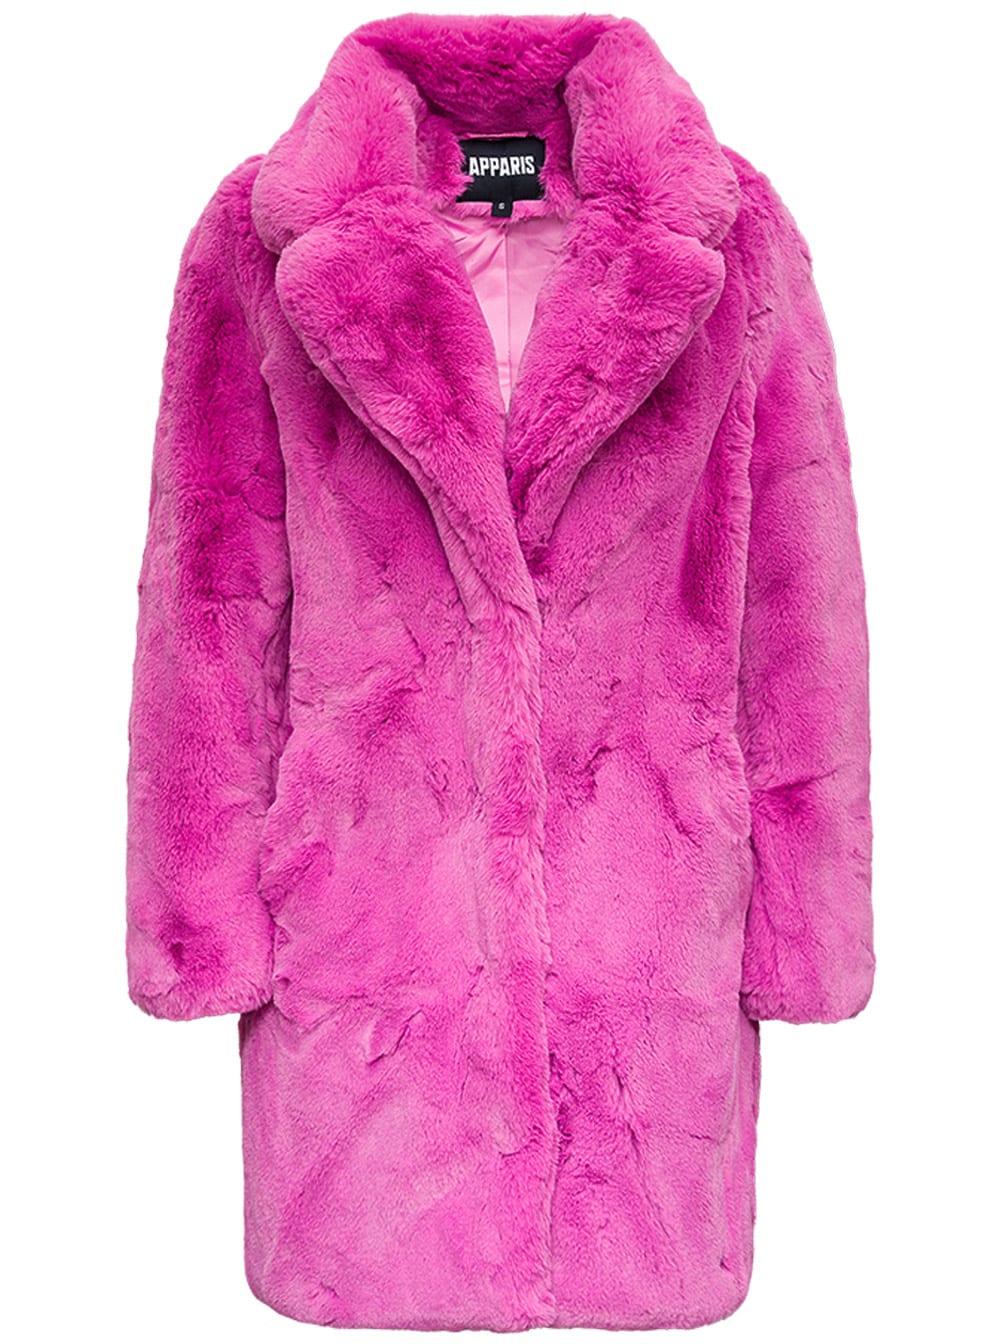 Apparis Stella Pink Ecological Fur Coat